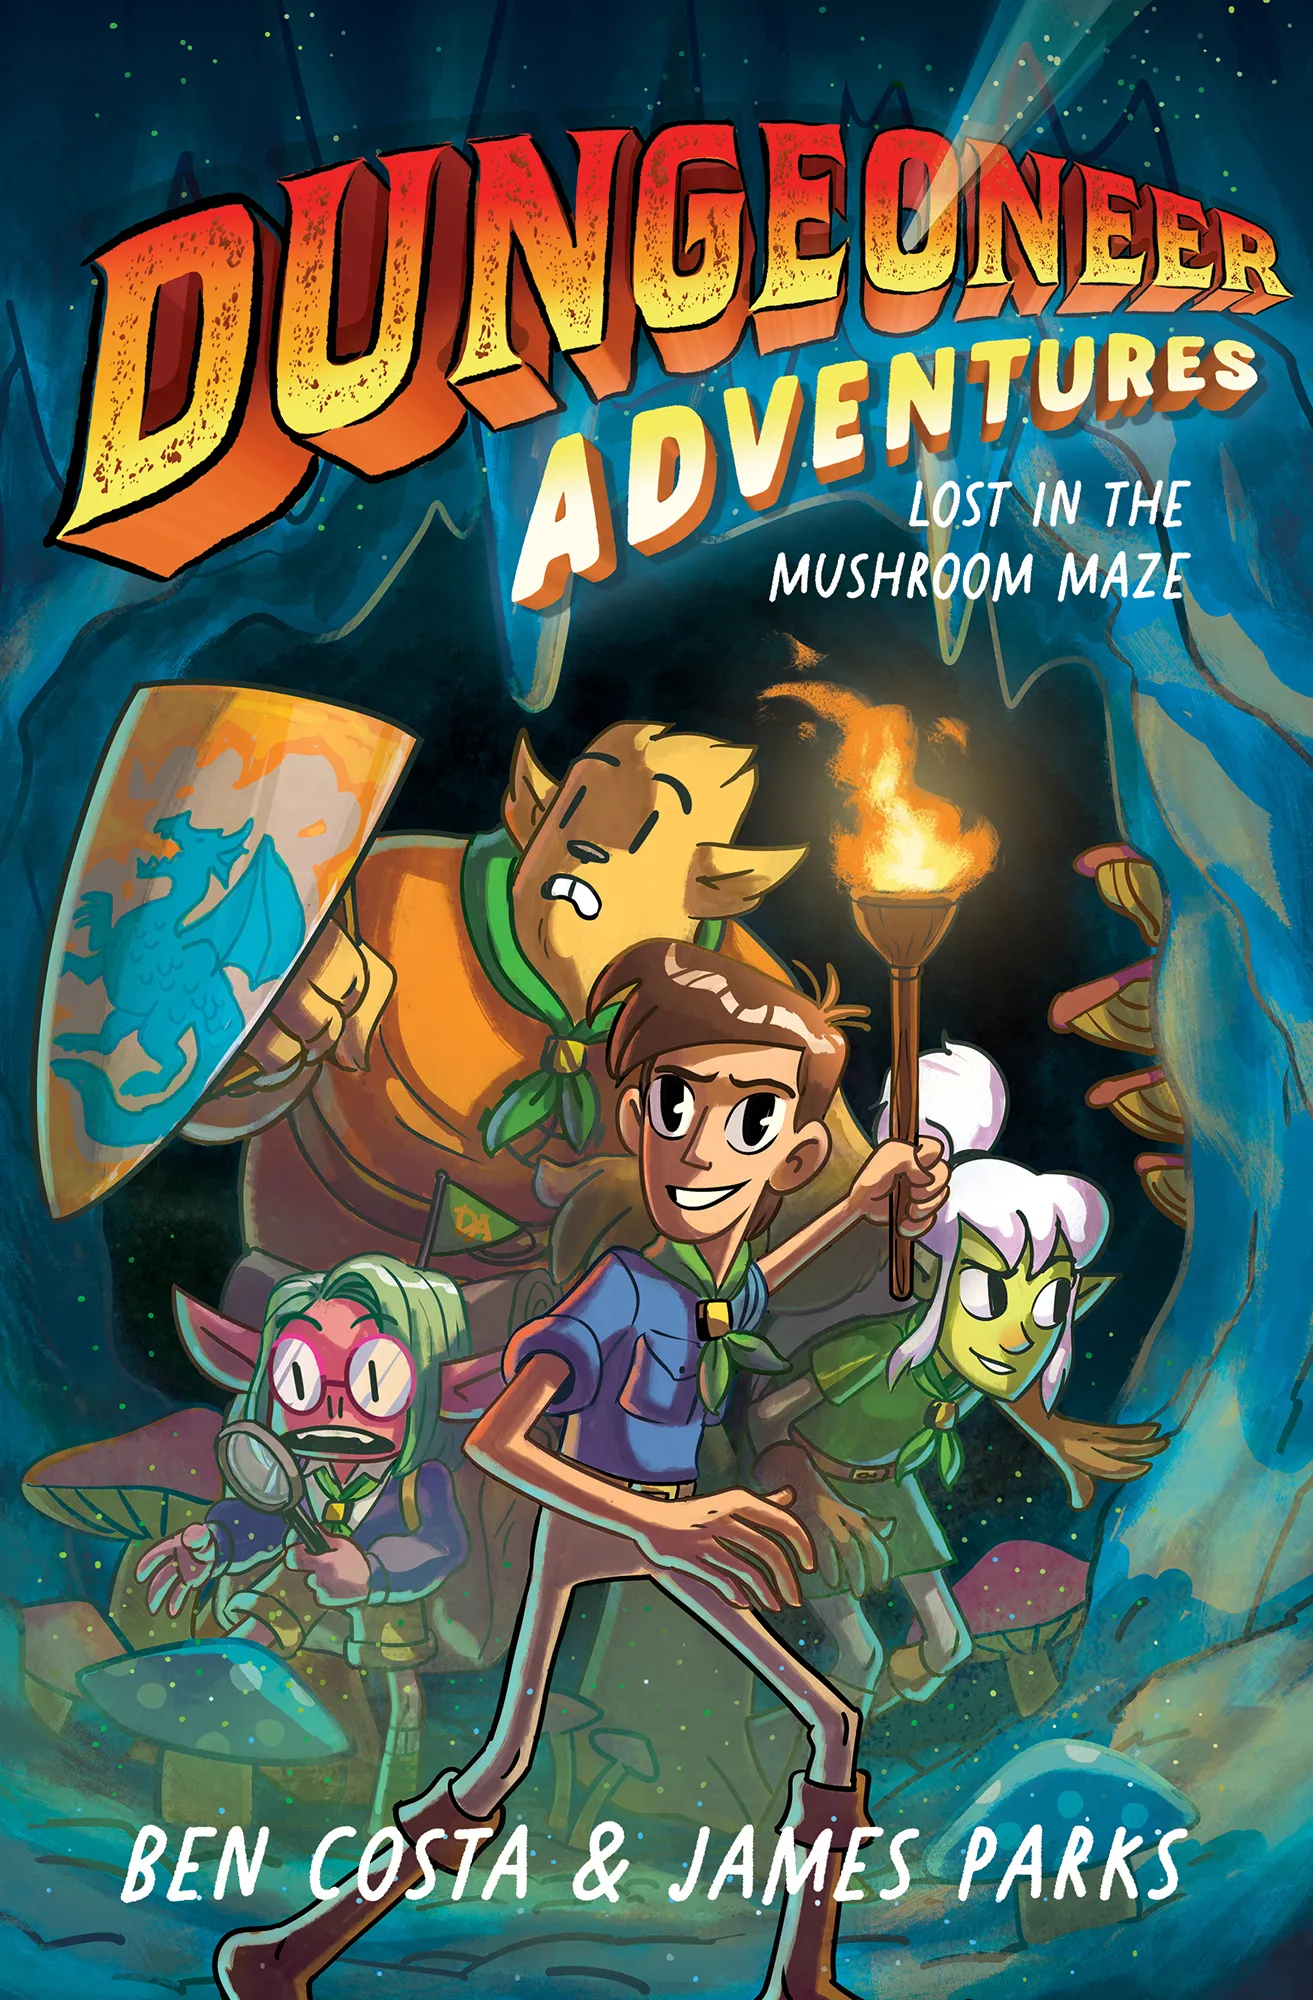 Lost in the Mushroom Maze (Dungeoneer Adventures #1)